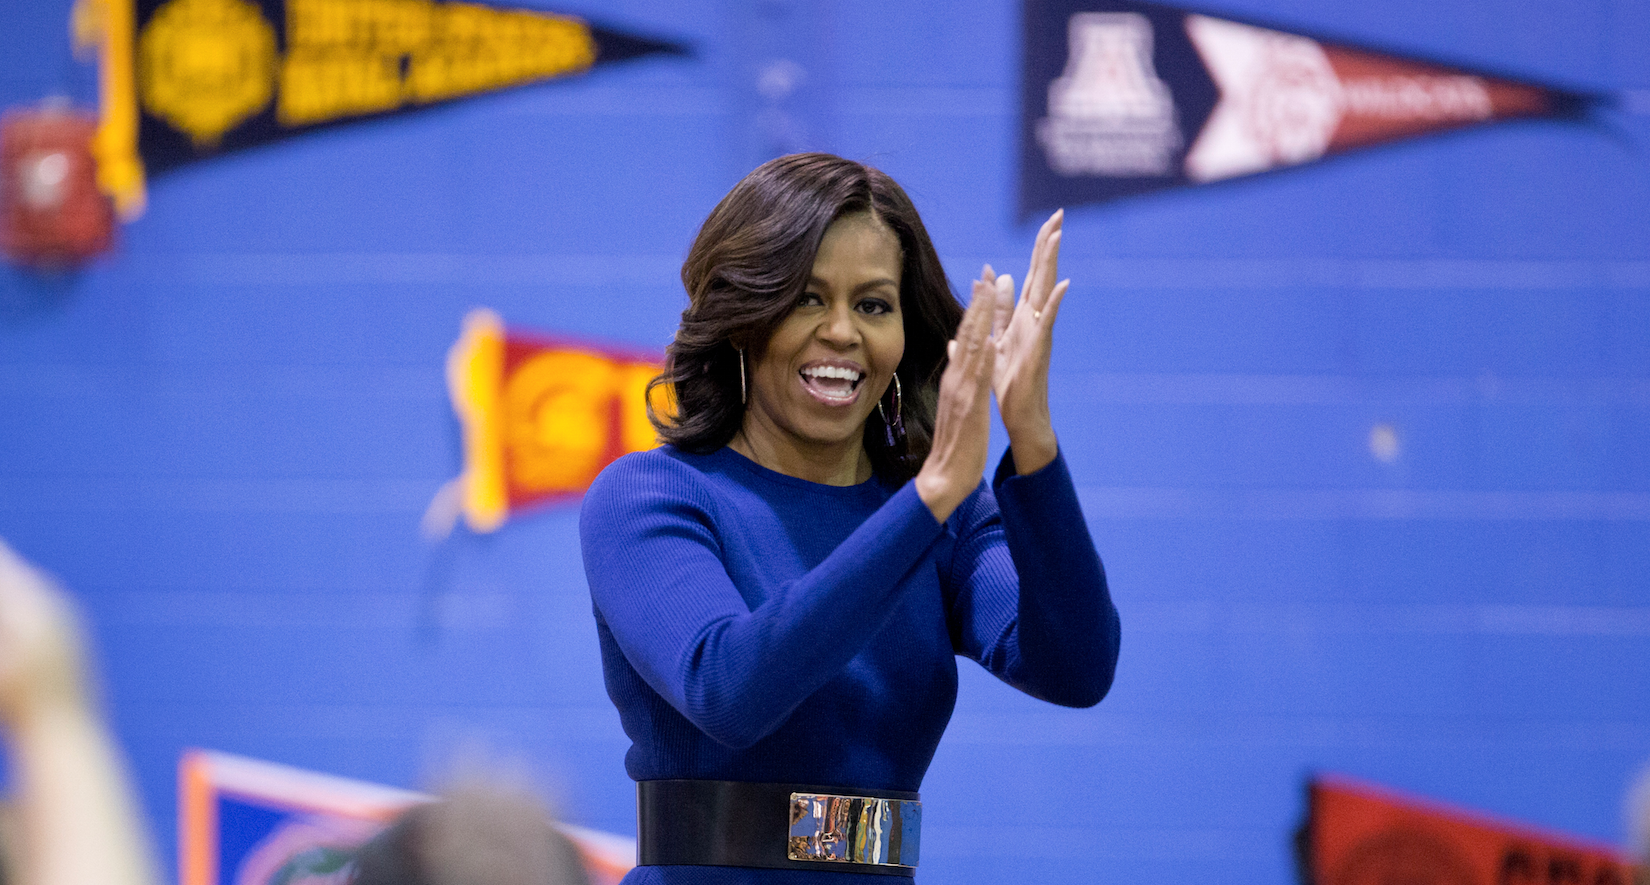  Funcionaria llama ‘Simia en tacones’ a Michelle Obama